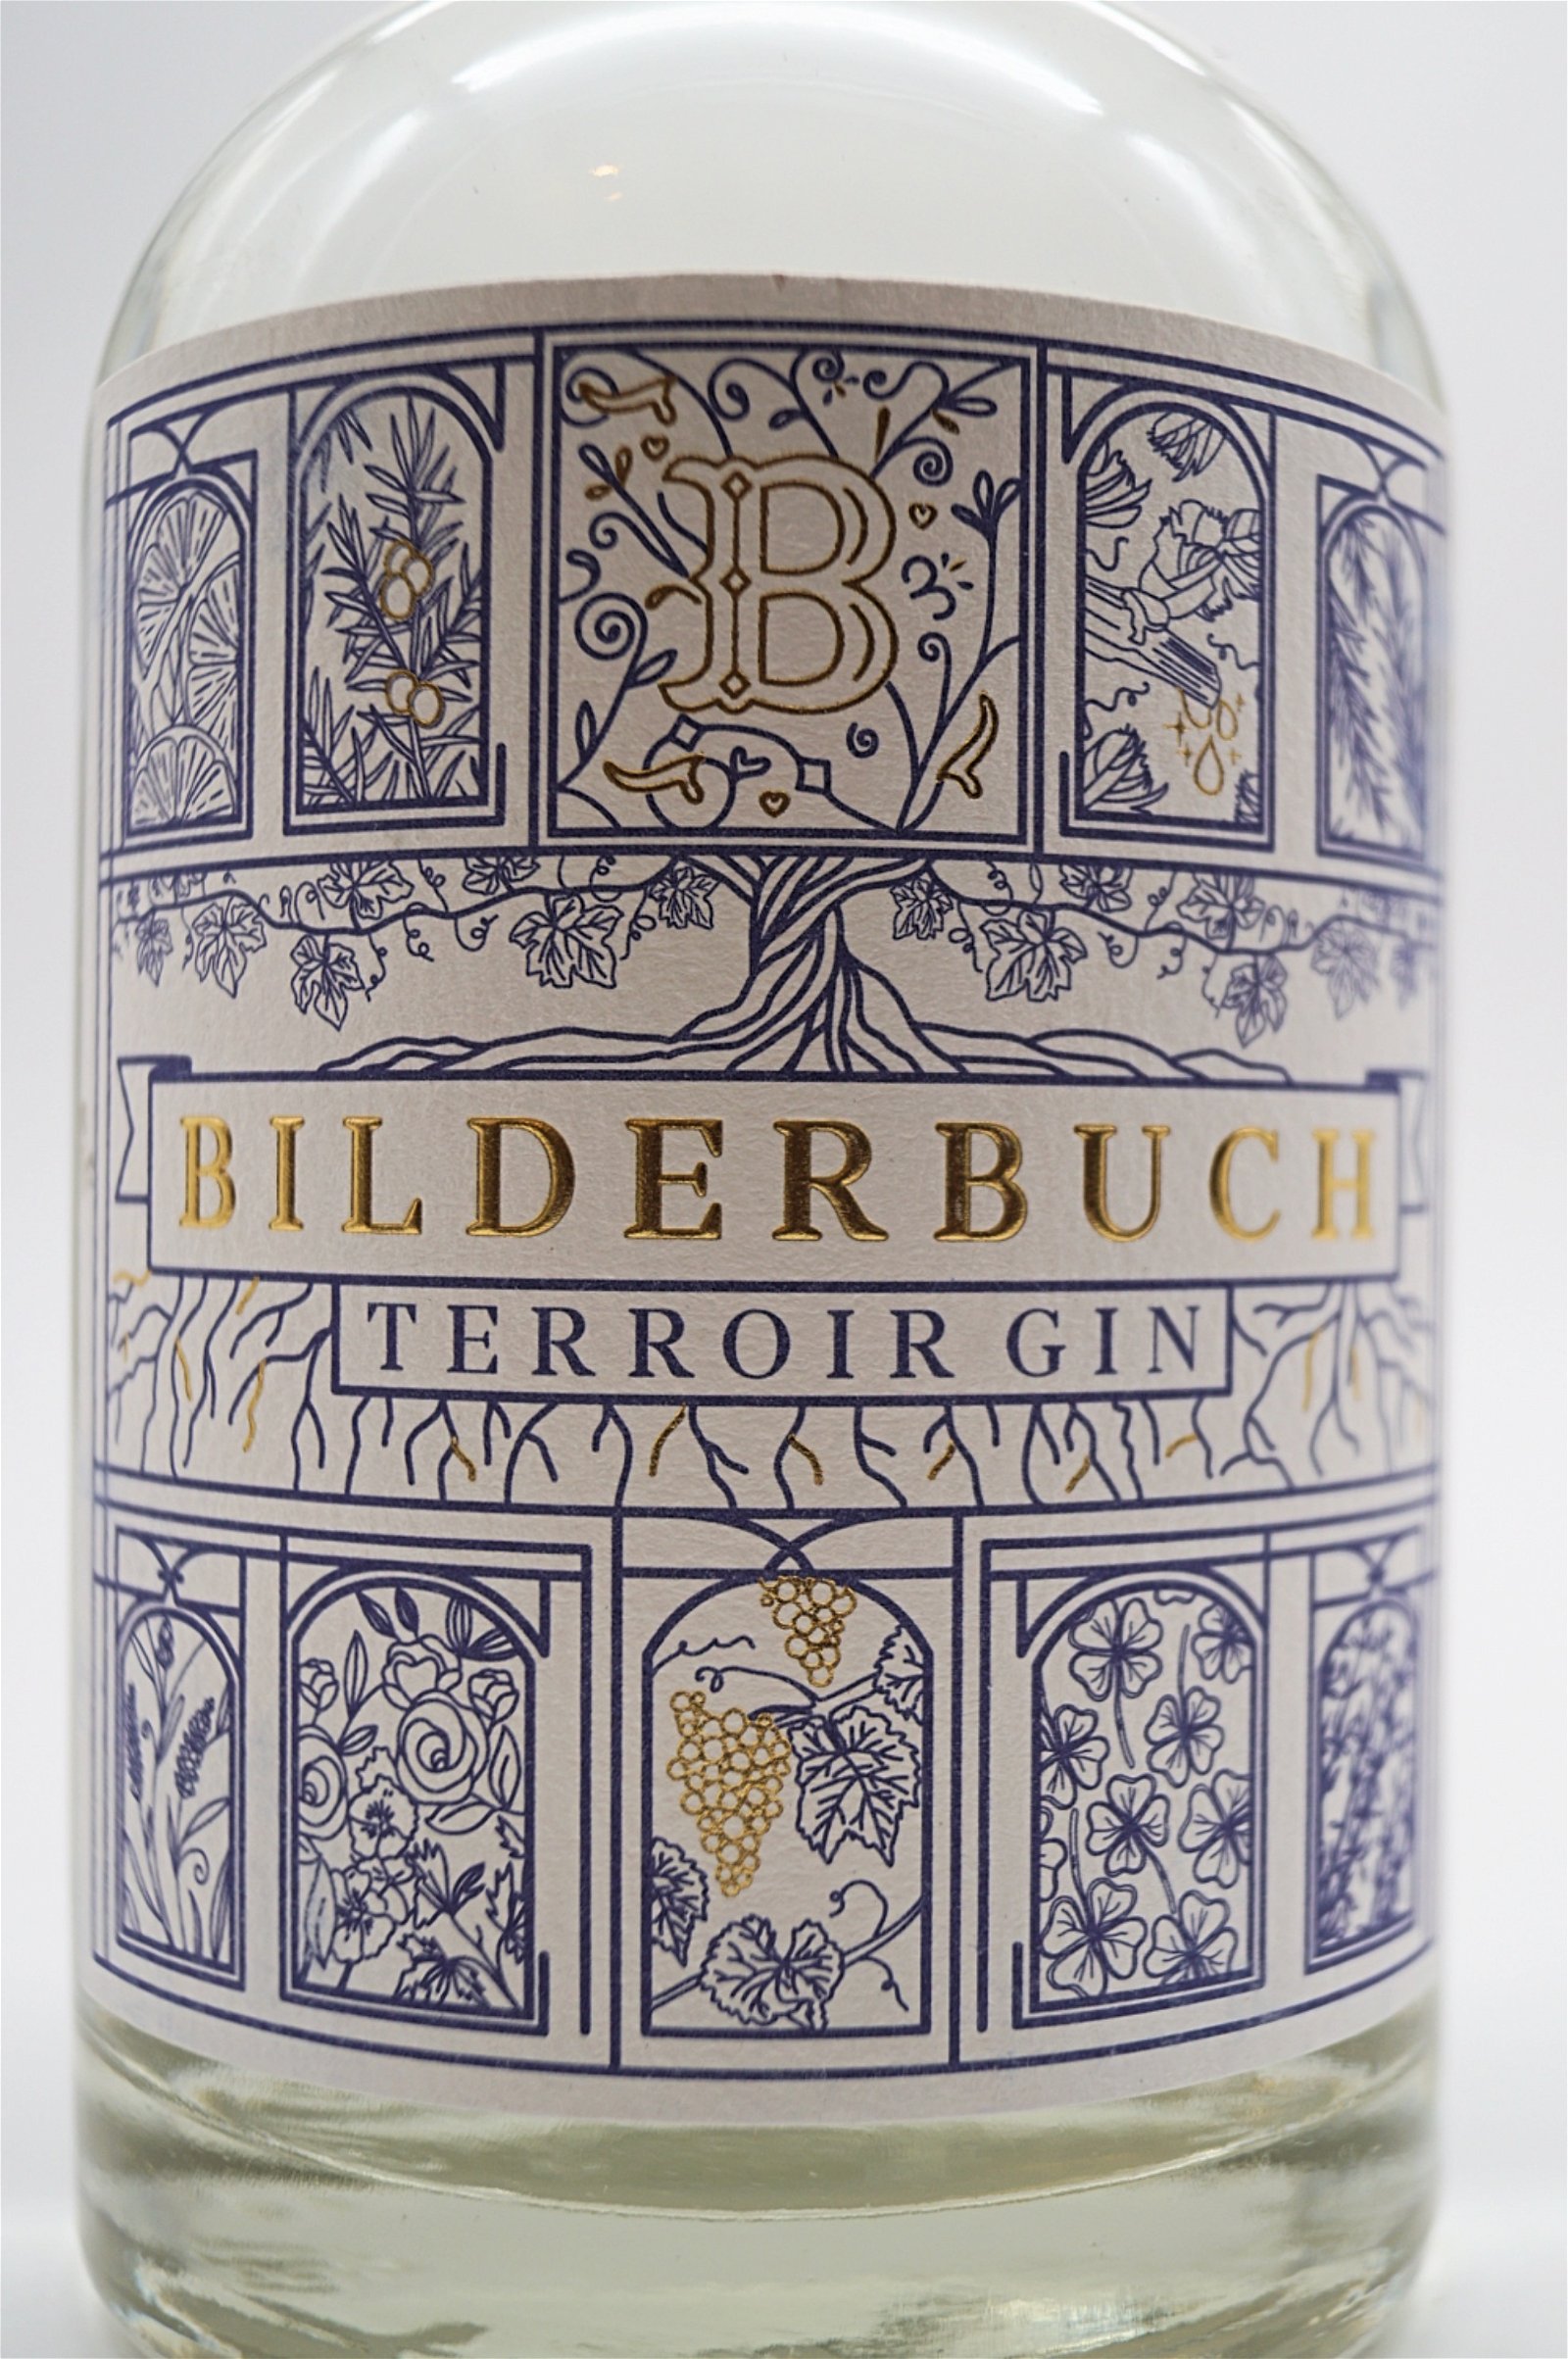 Bilderbuch Terrior Gin